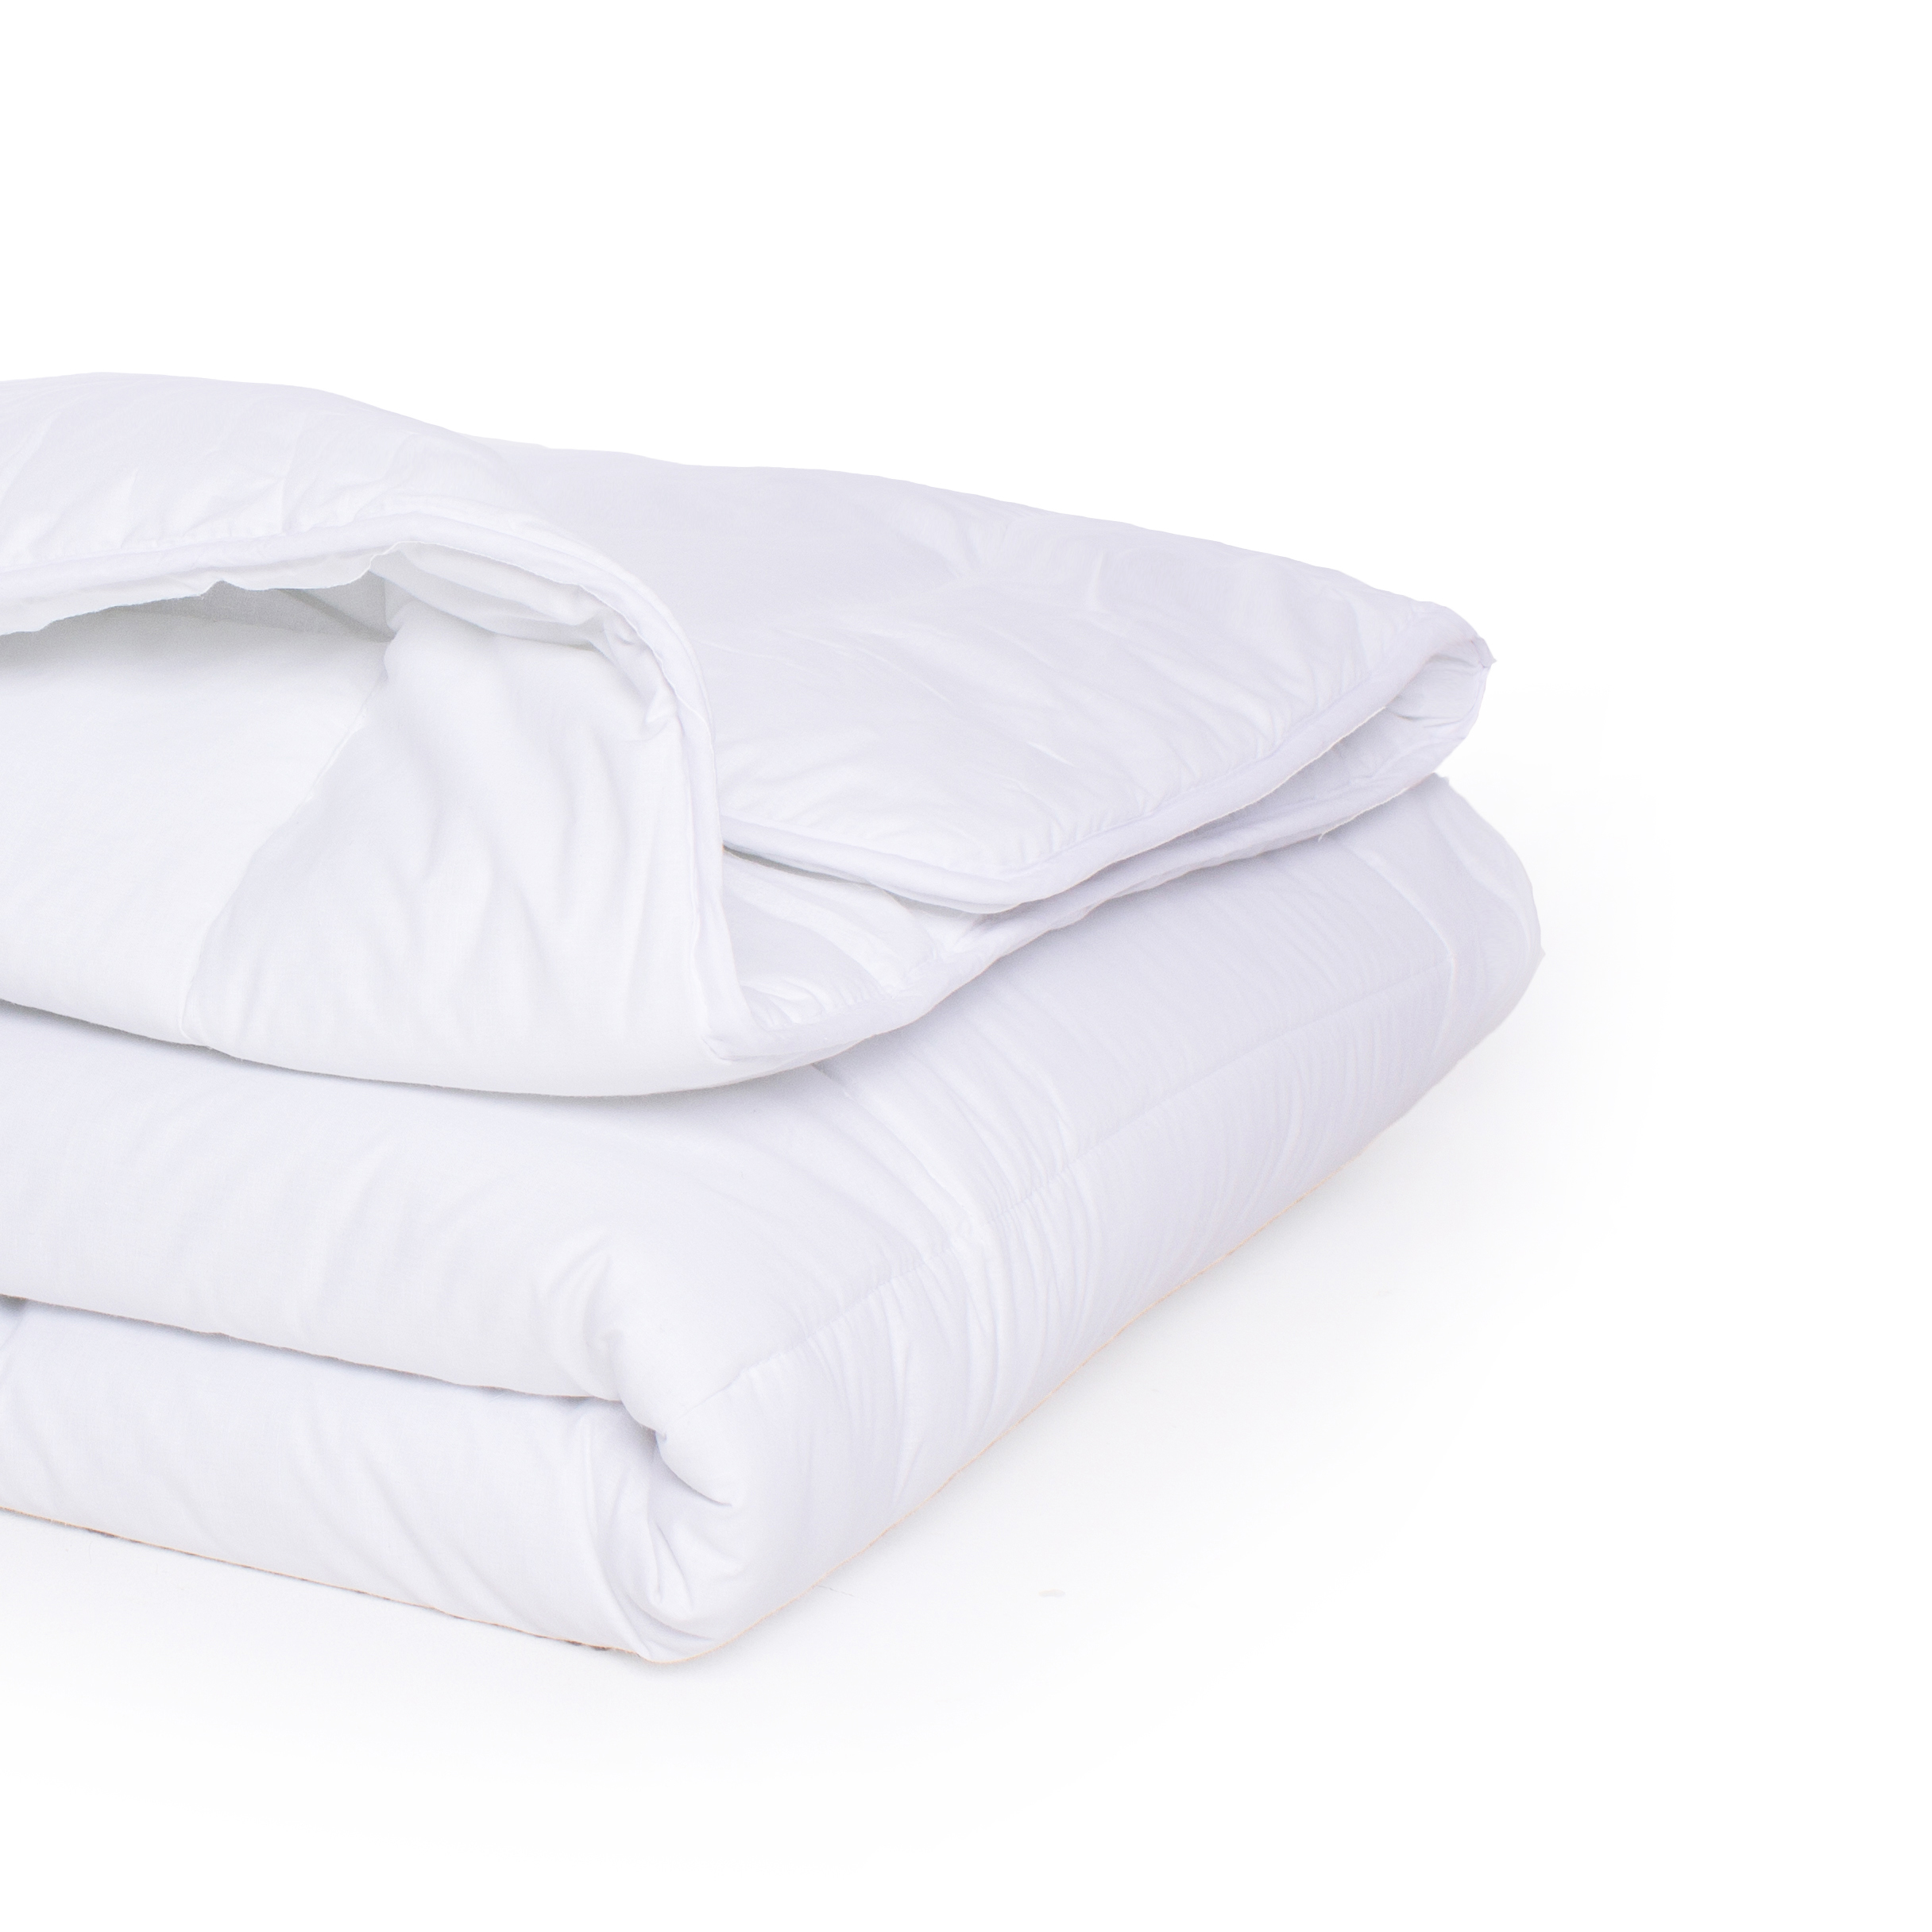 Одеяло шерстяное MirSon Bianco Экстра Премиум №0786, демисезонное, 172x205 см, белое - фото 4